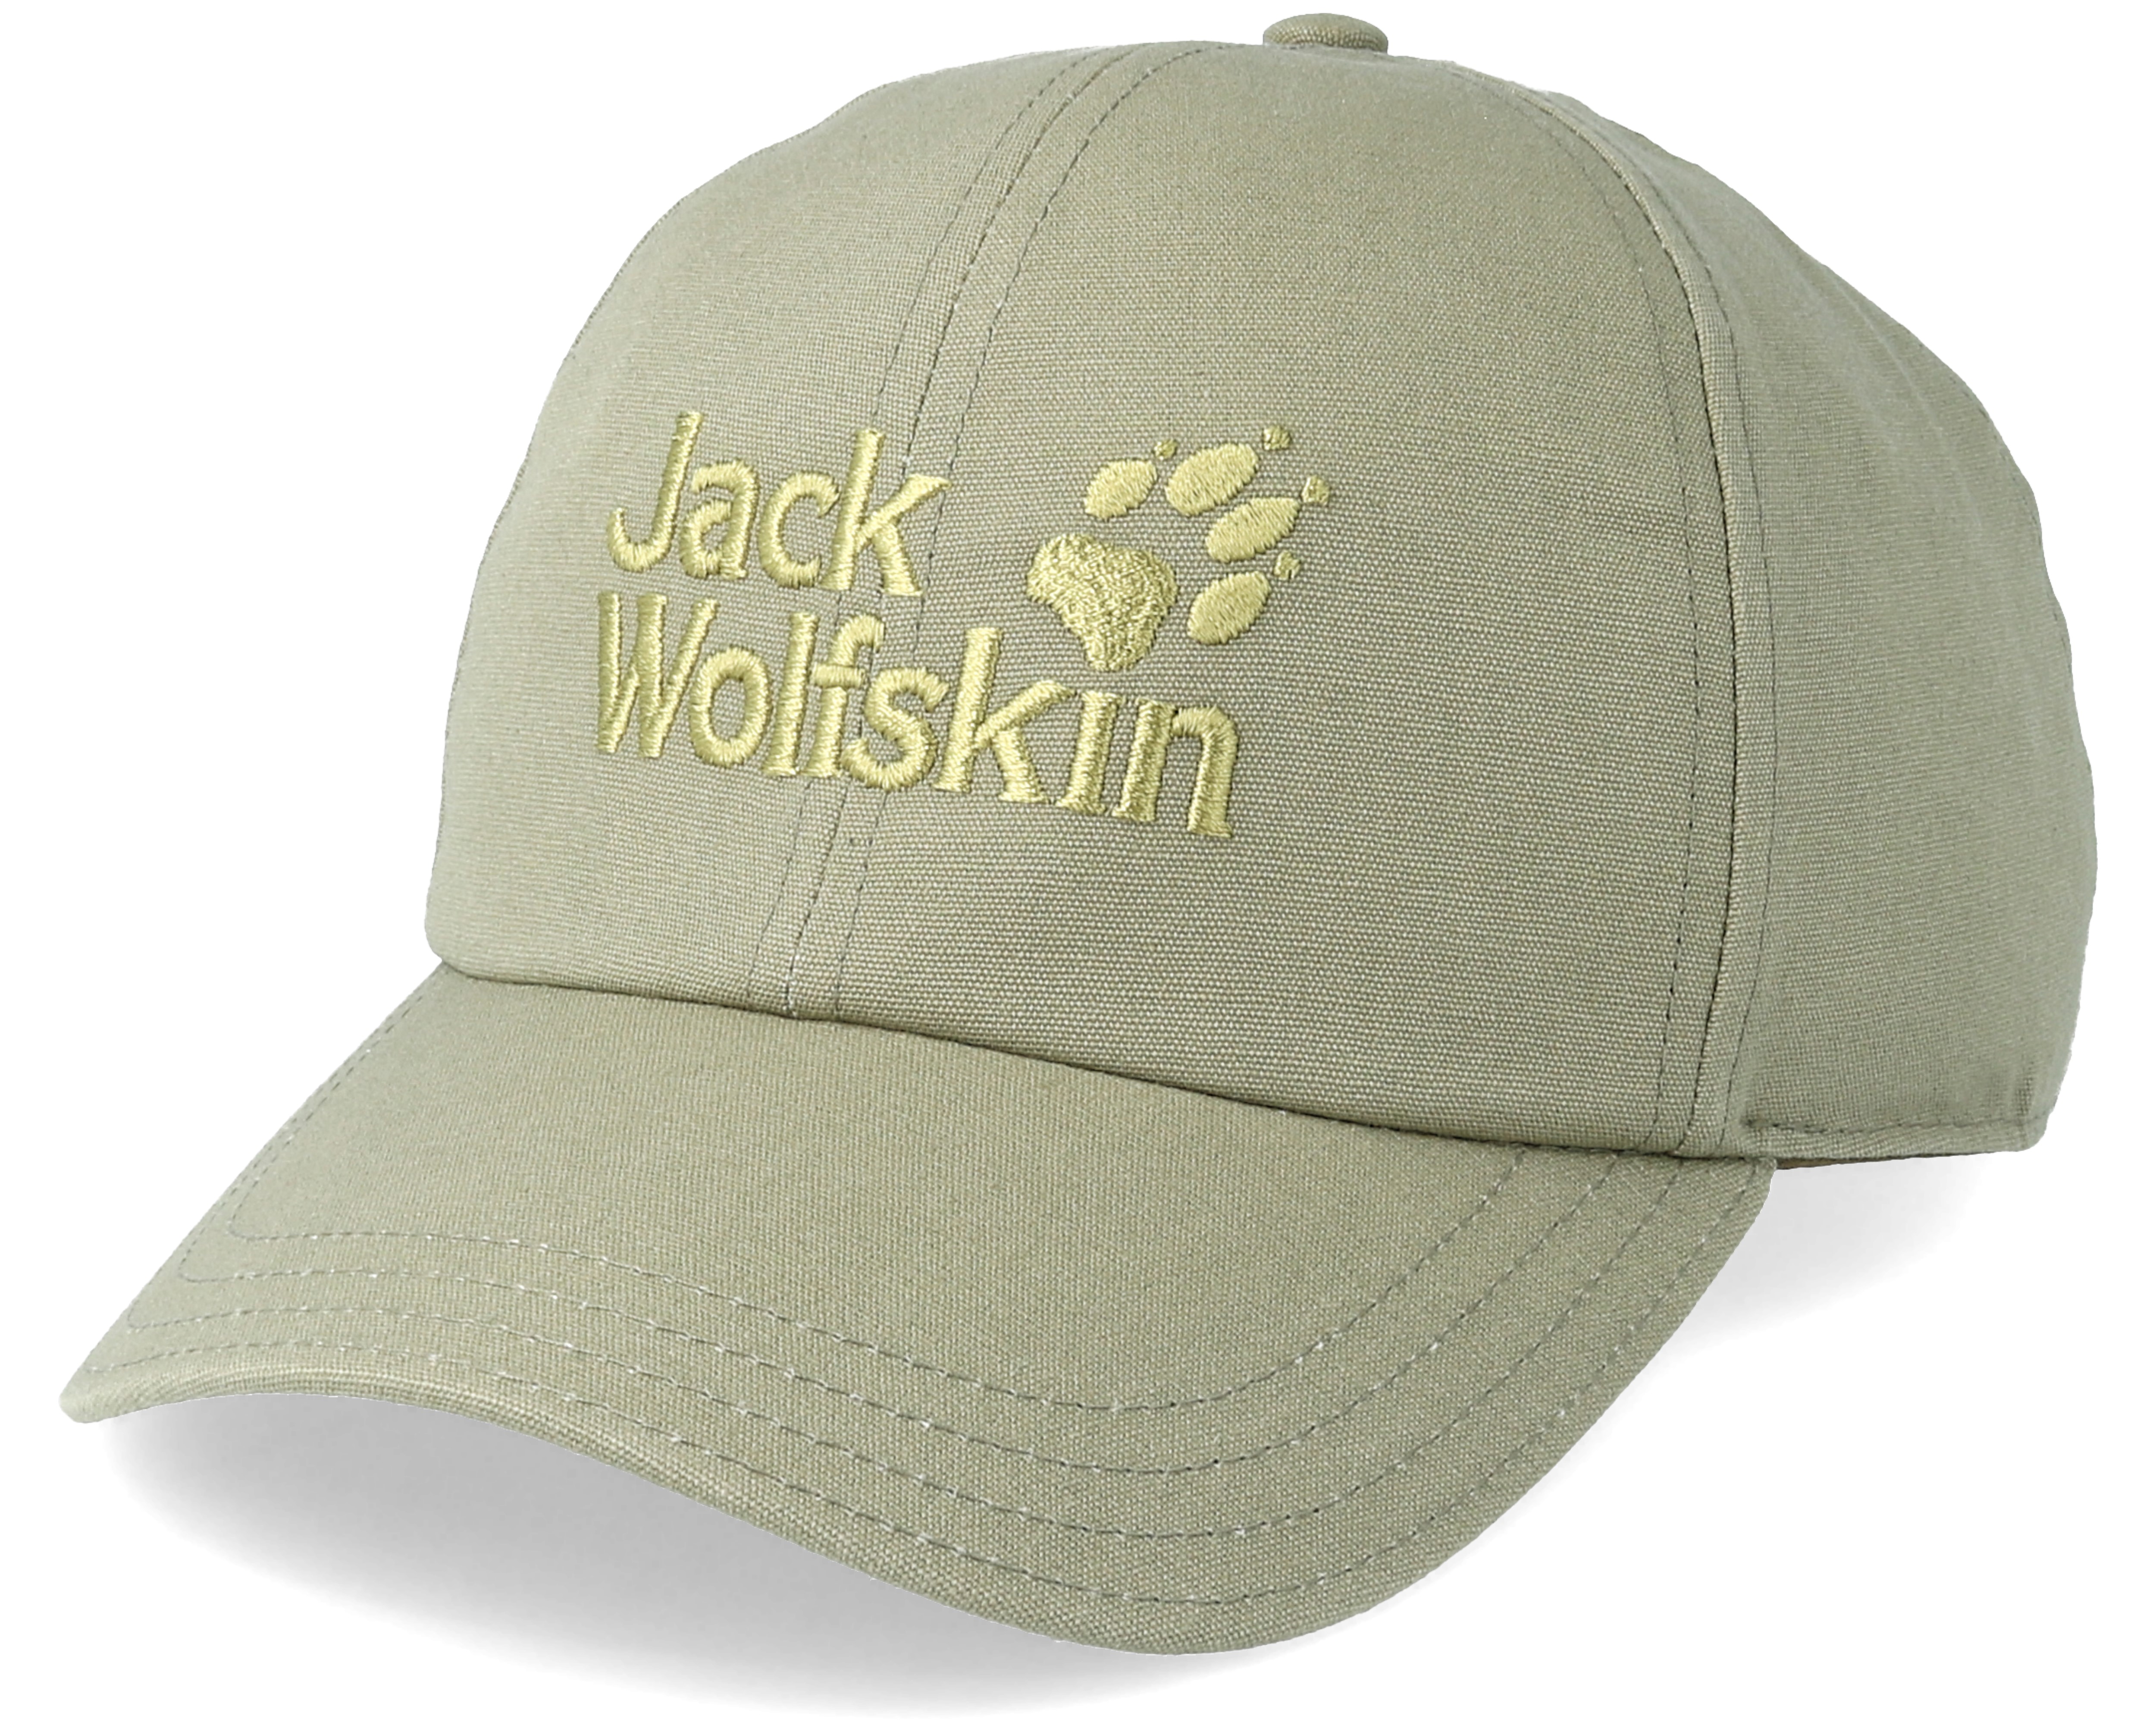 Baseball Cap Khaki Green Adjustable - Jack cap Wolfskin